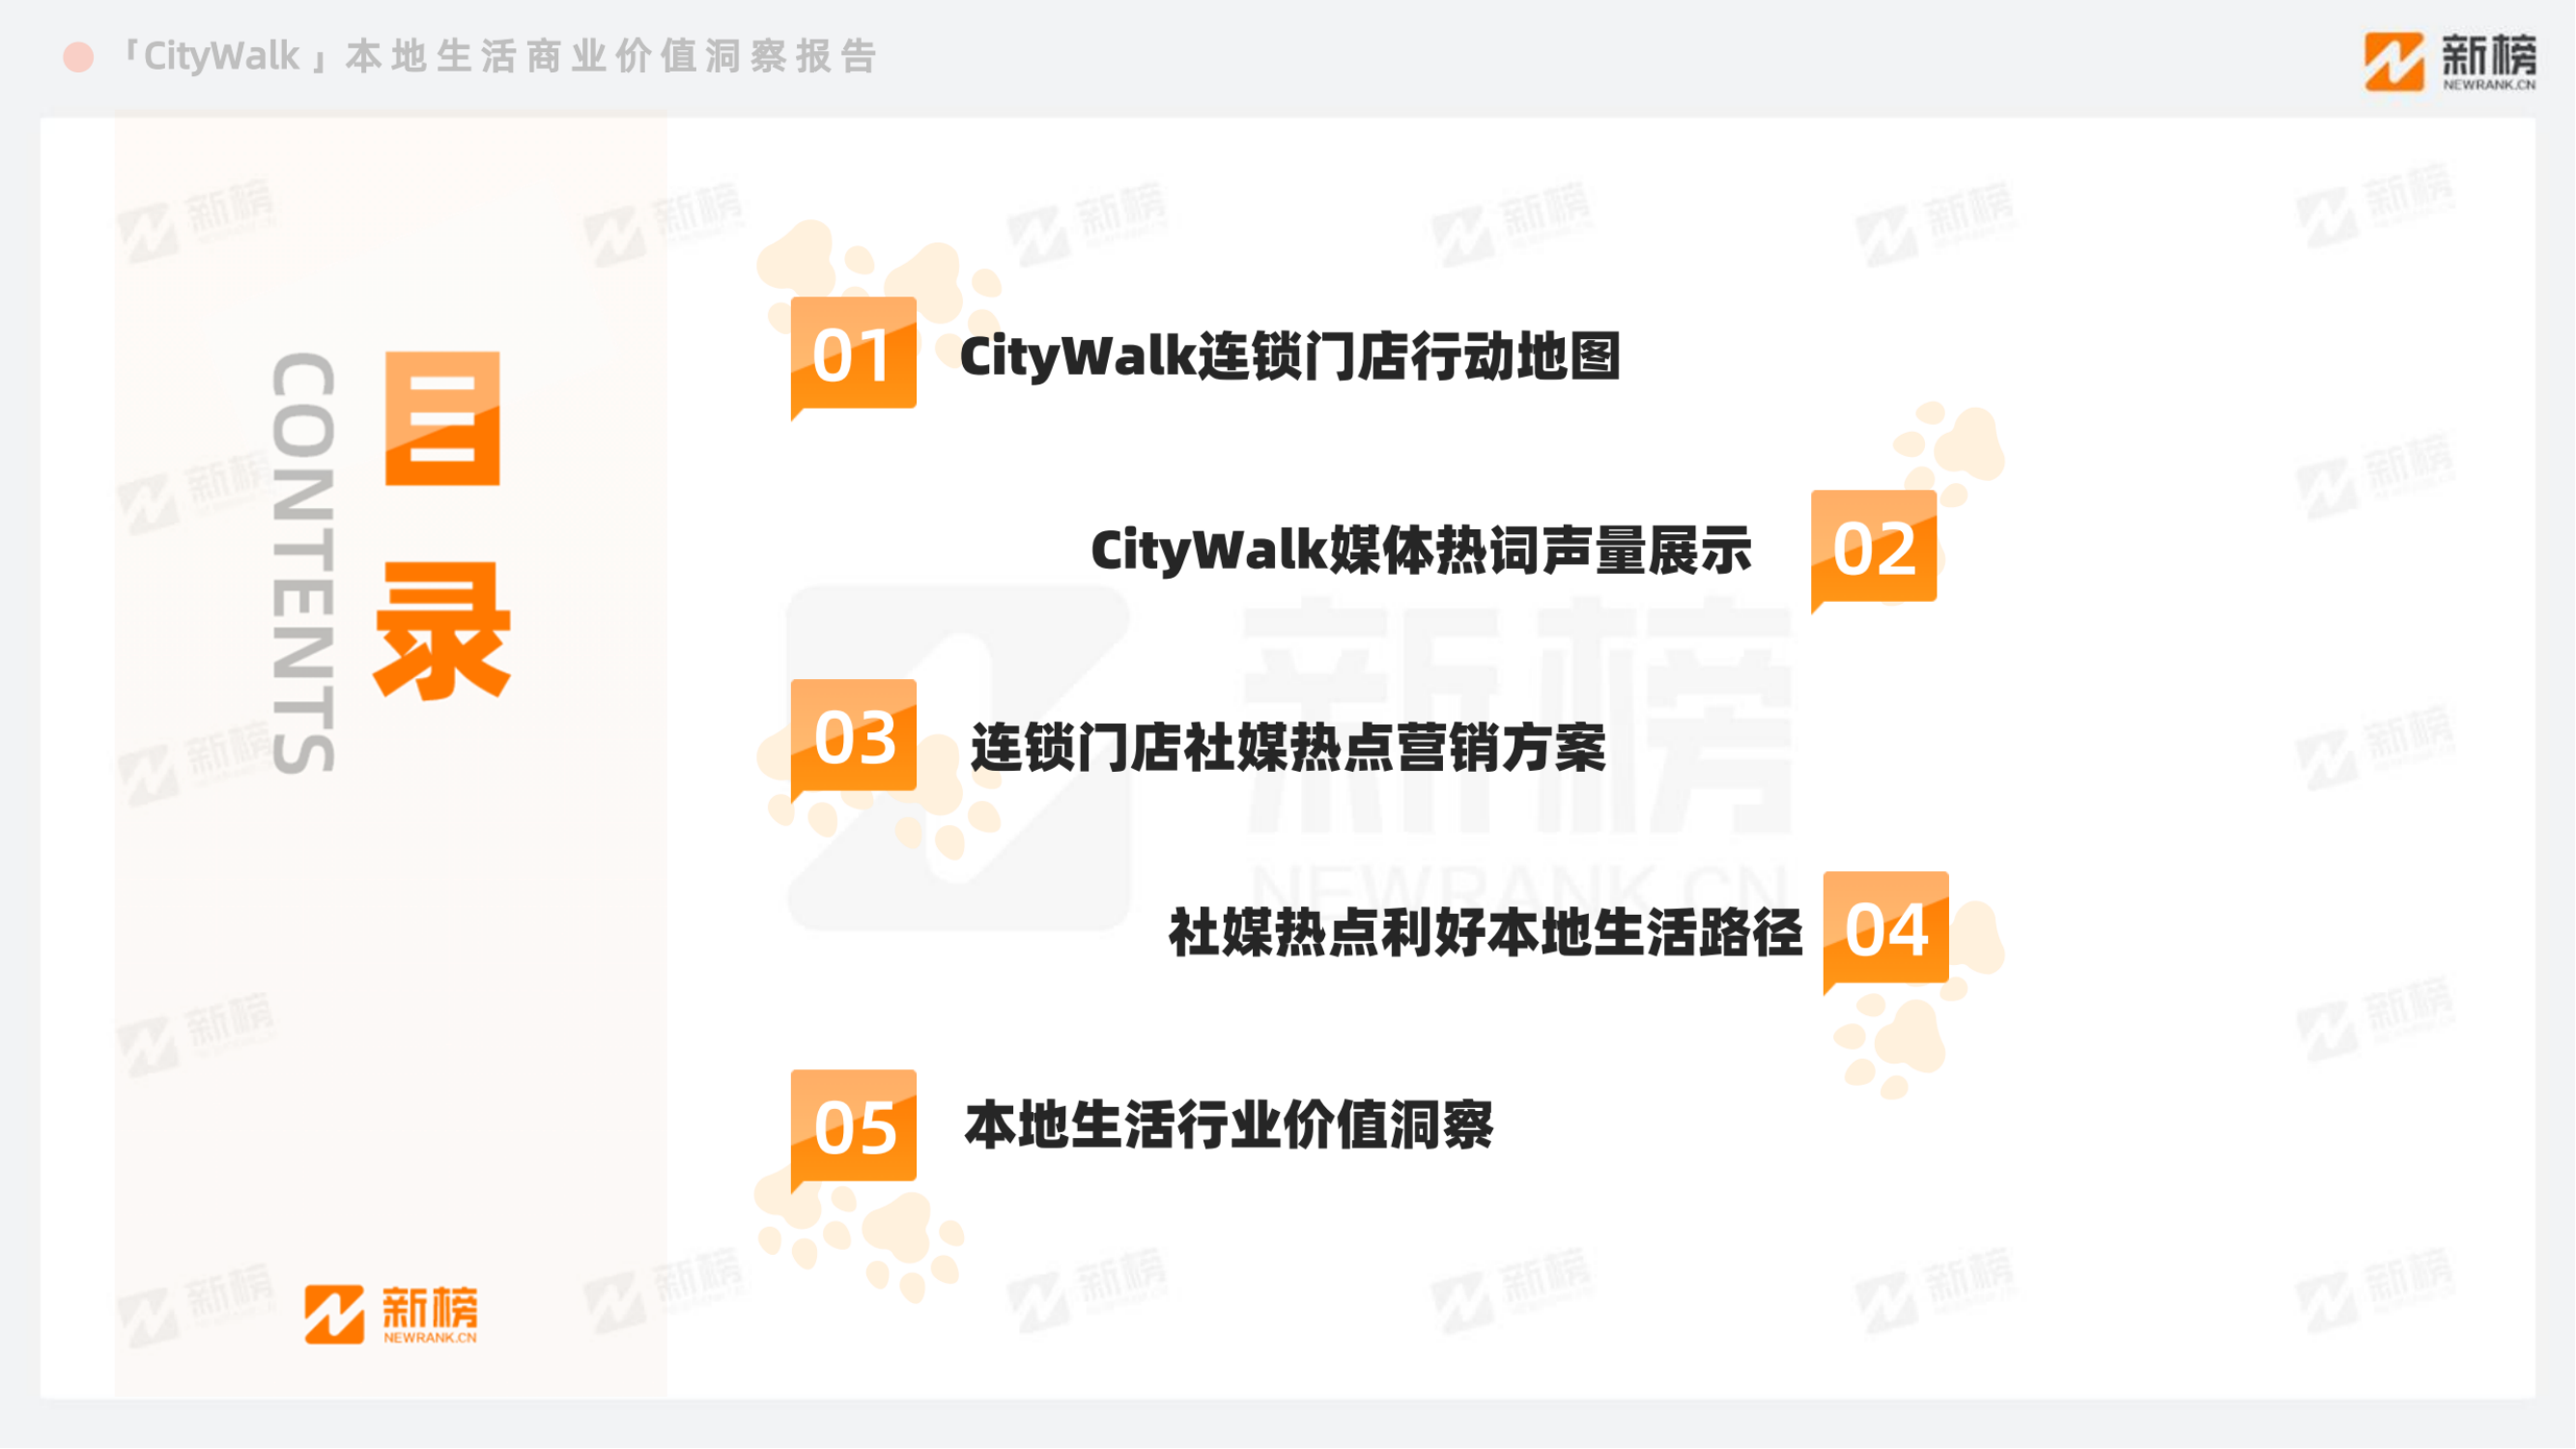 CityWalk本地生活商业价值洞察报告_纯图版_01.png